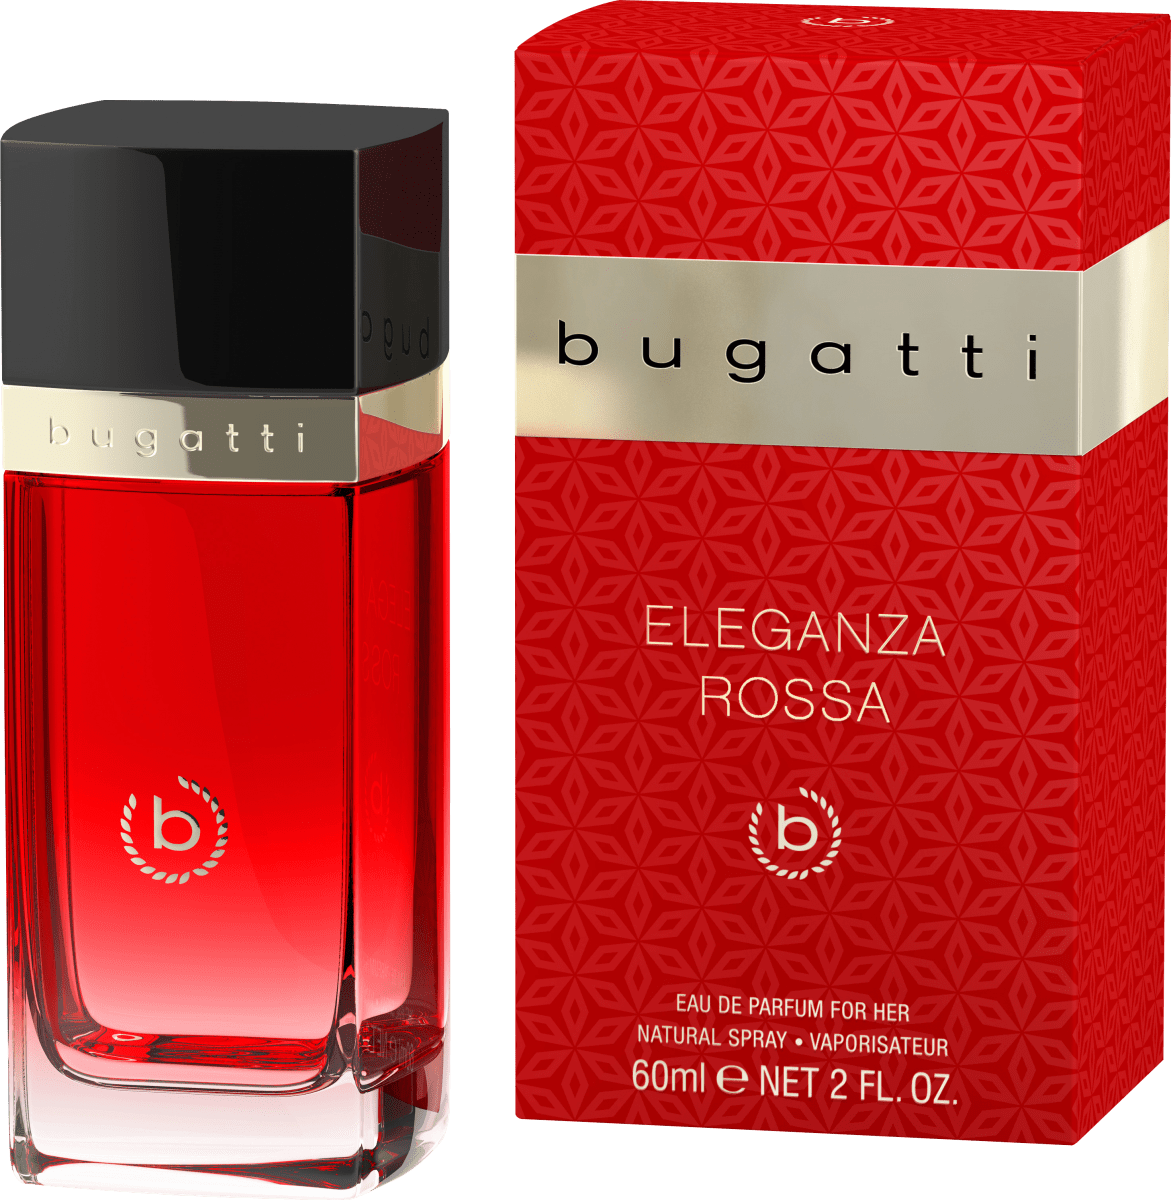 Parfum, Eau Rossa bugatti de Eleganza ml 60